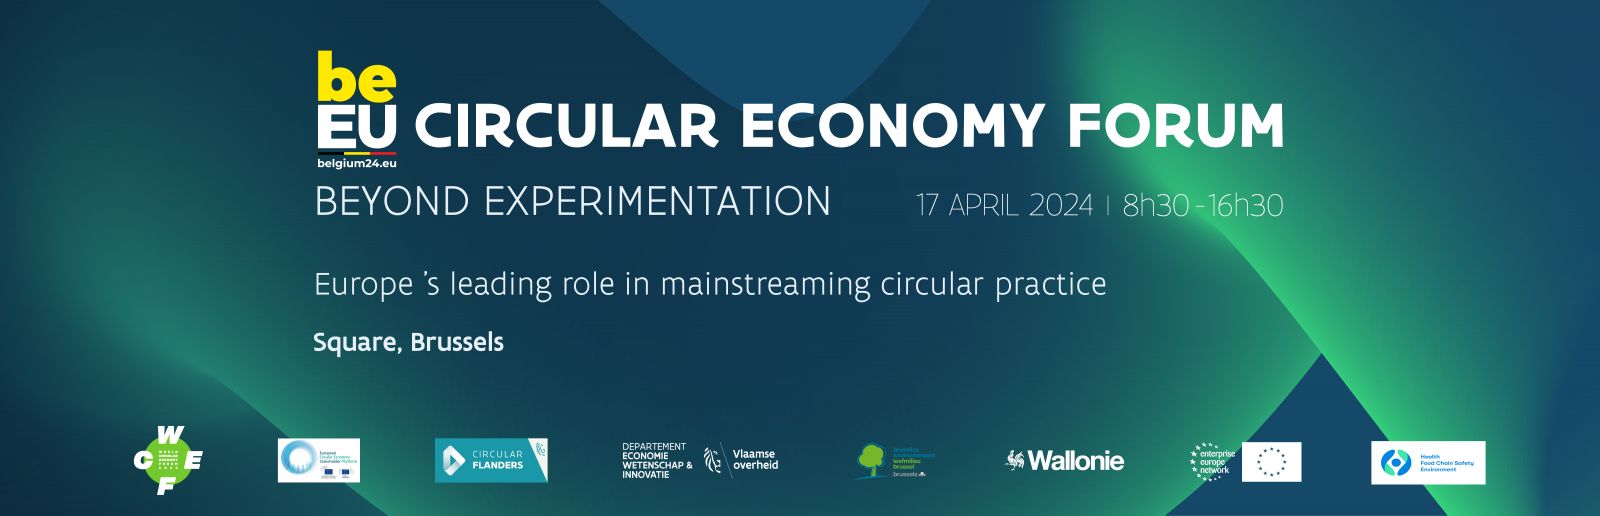 EU Circular Economy Forum 2024